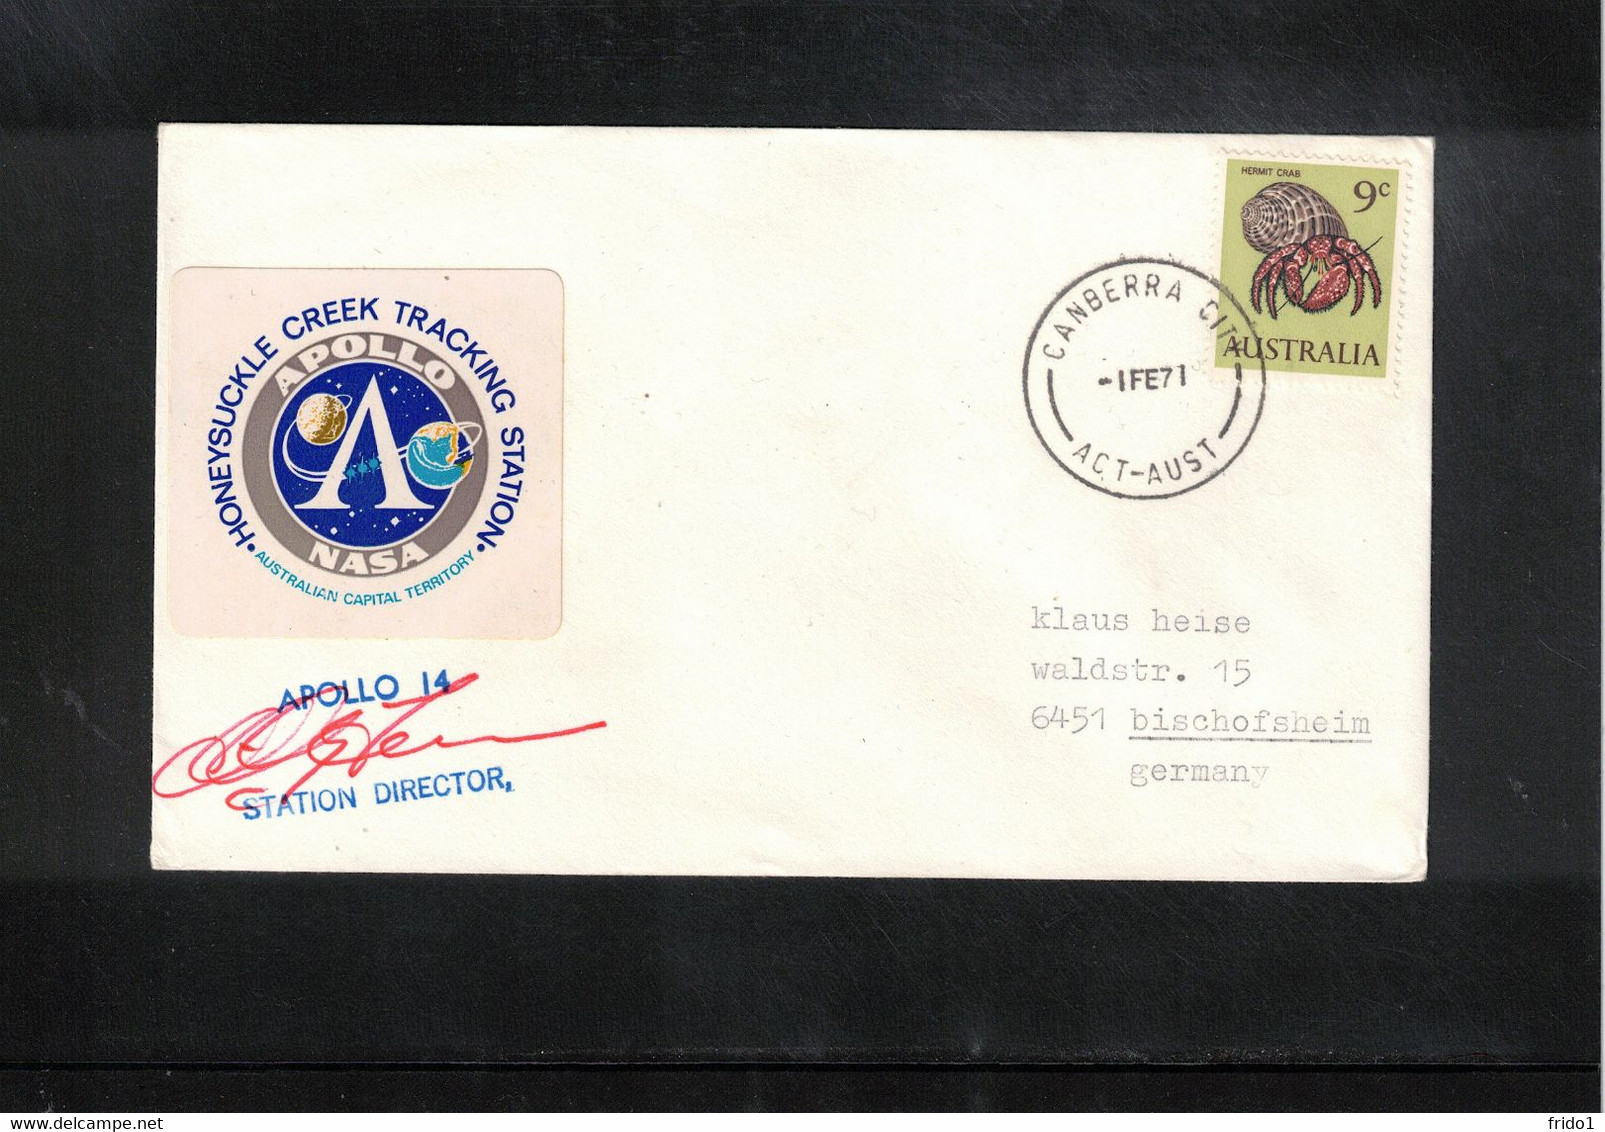 Australia 1971 Space / Raumfahrt Apollo 14 Honeysuckle Creek Tracking Station Interesting Signed Letter - Oceanía